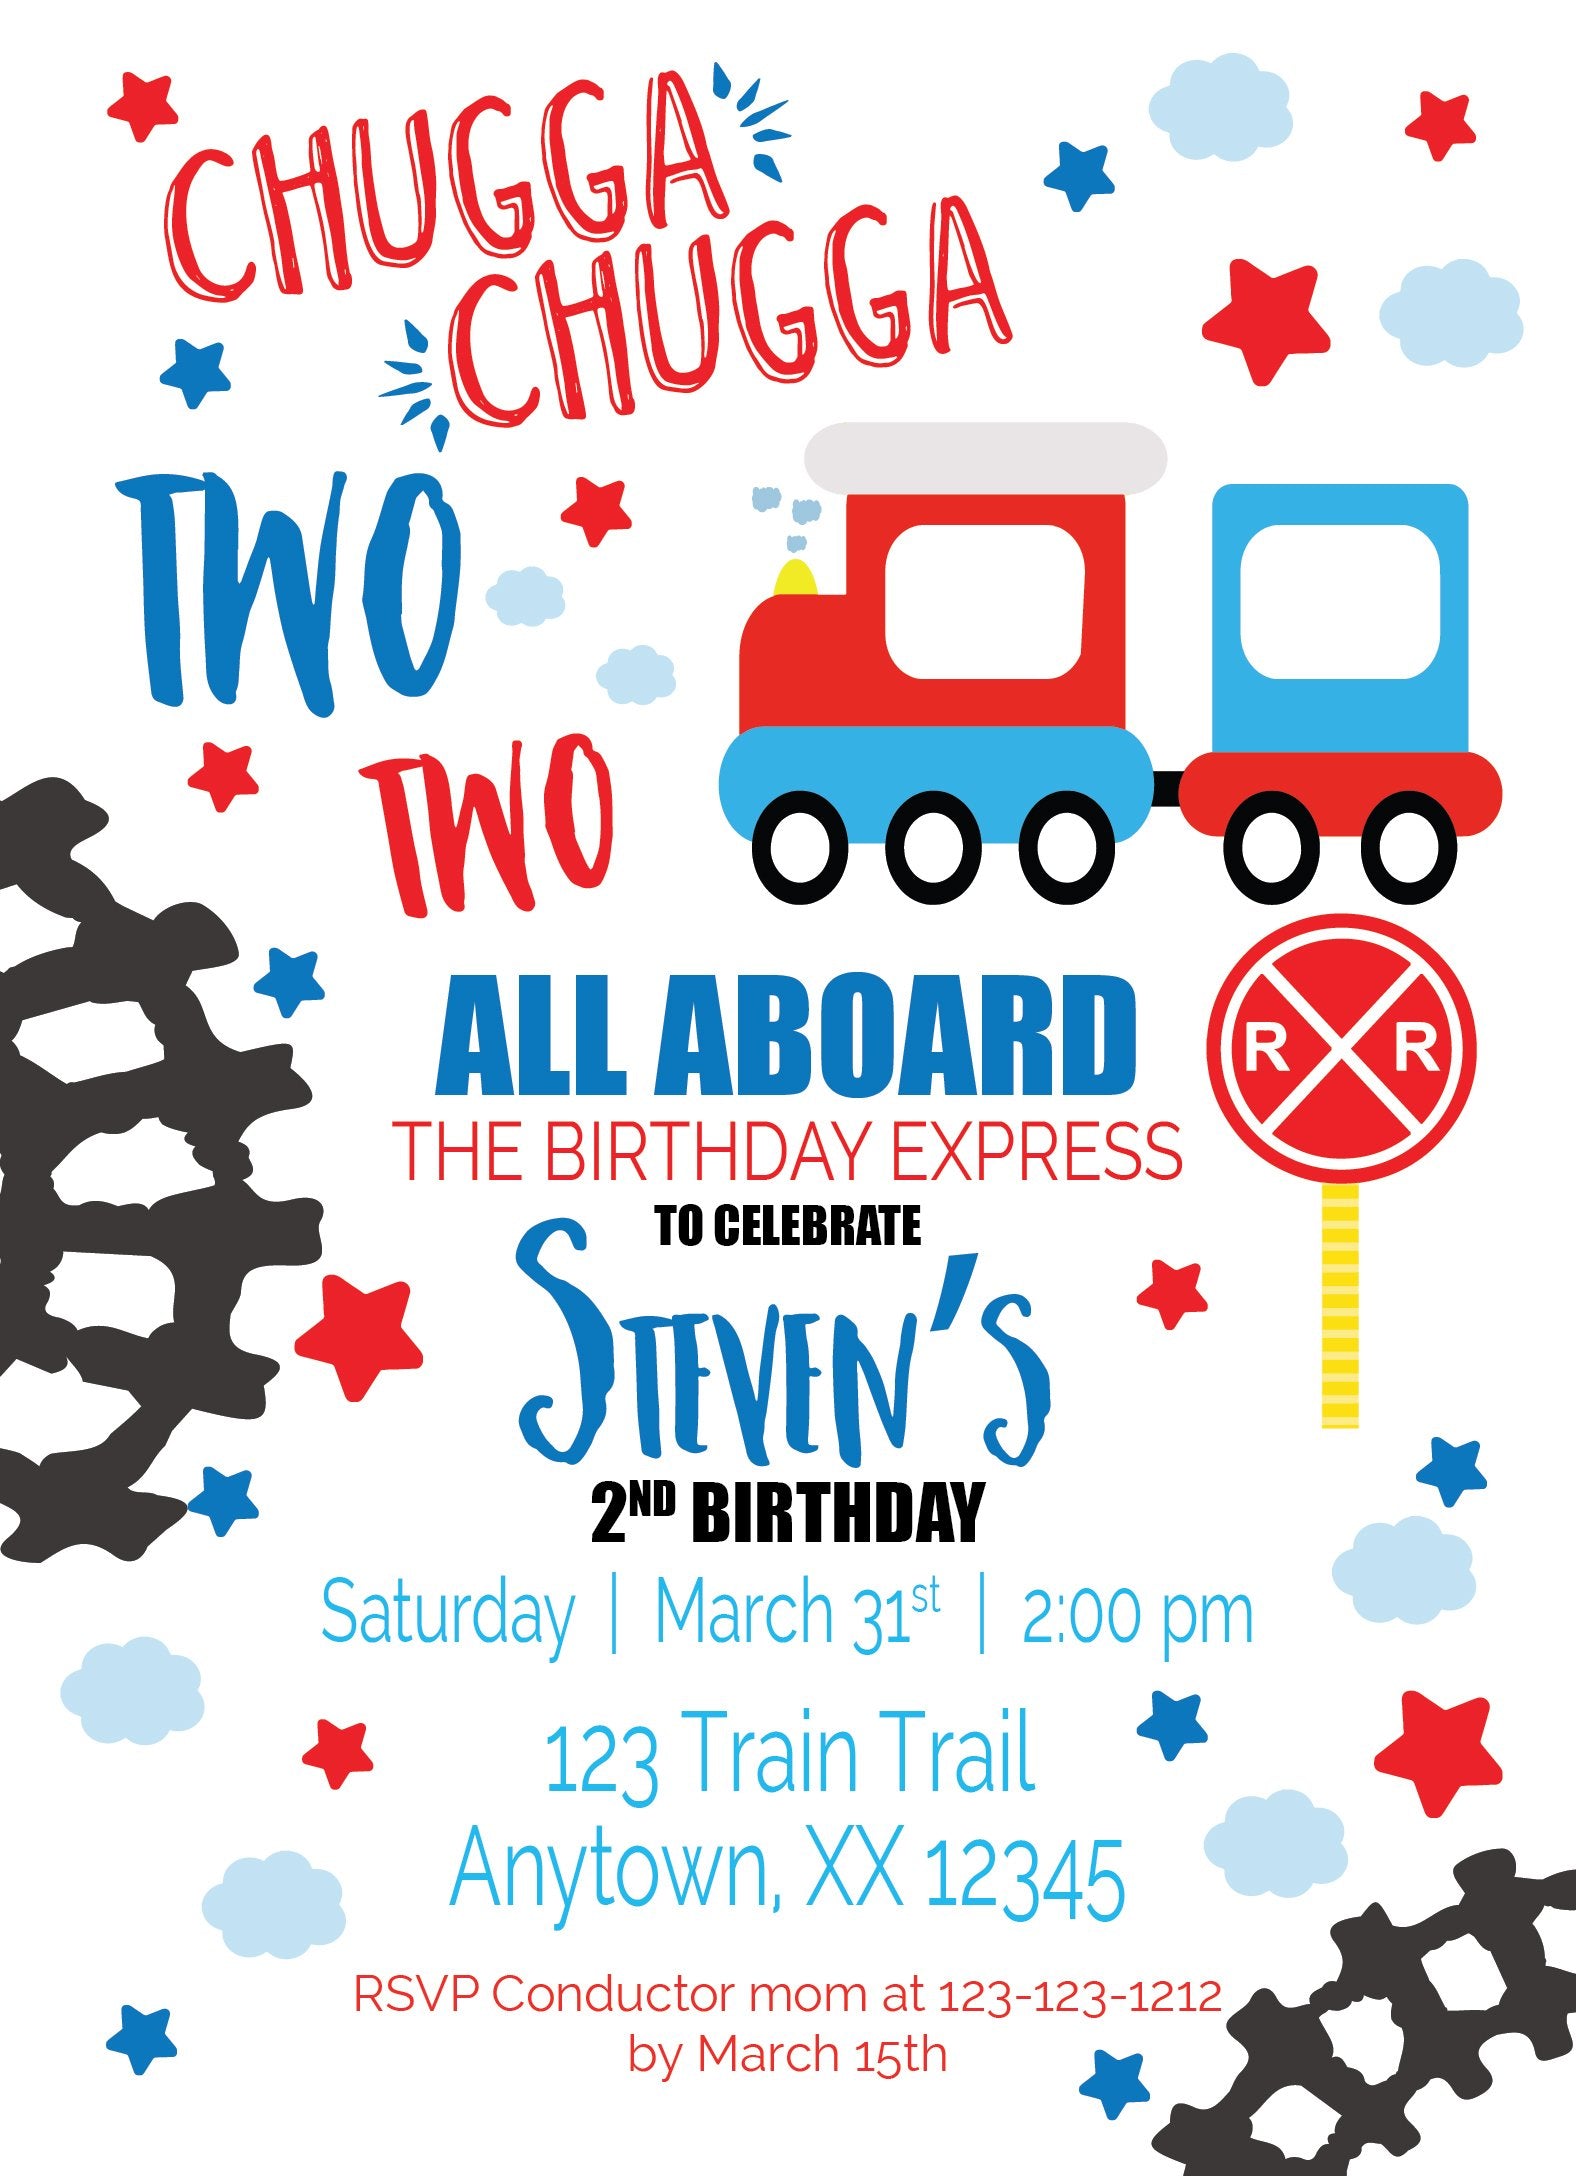 Chugga Chugga personalized birthday invitations, train invitation